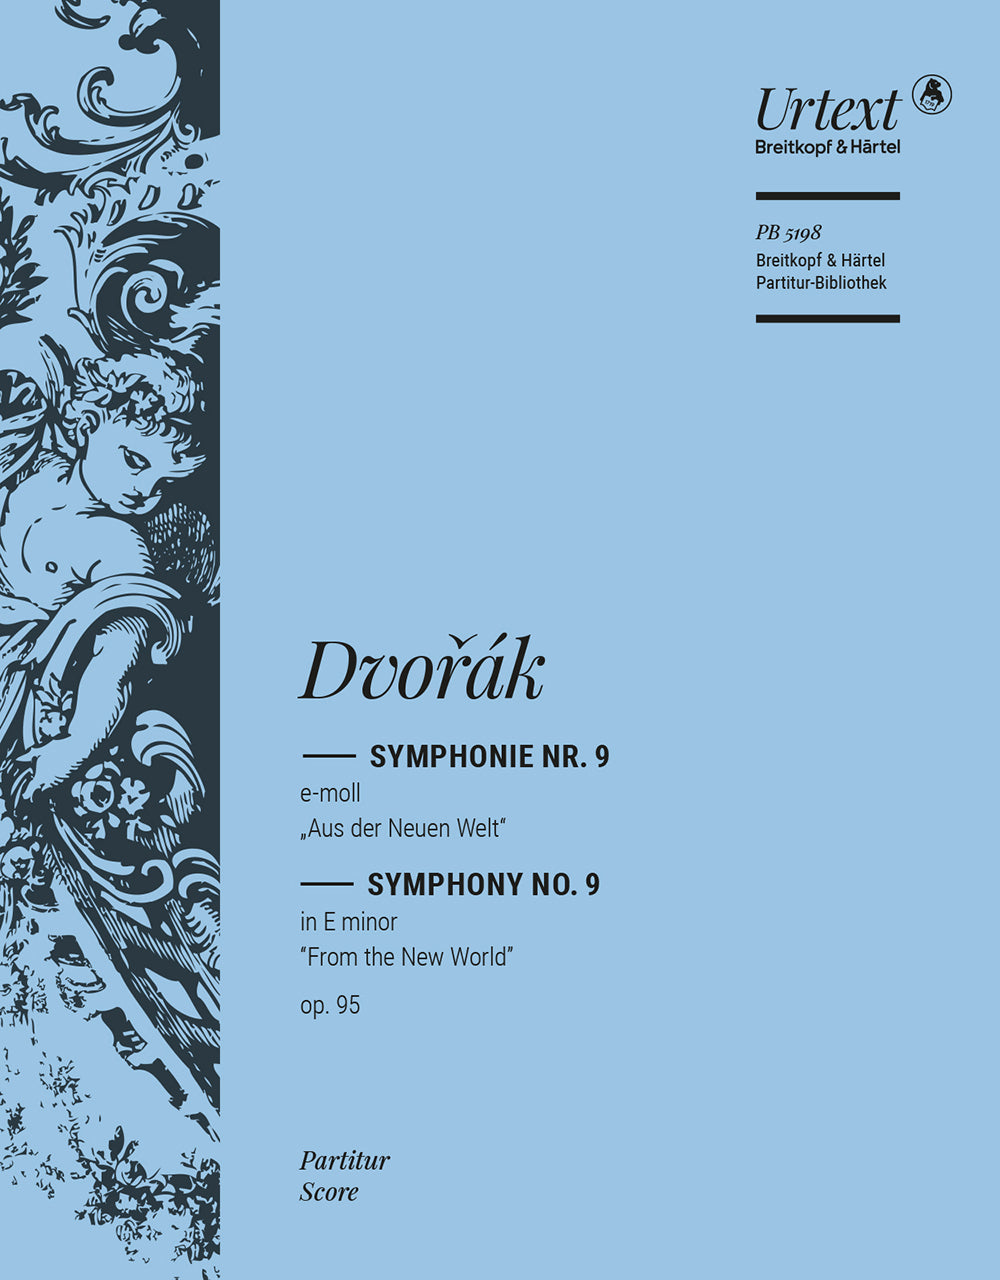 Dvorak Symphony No. 9 in E minor op 95 Full Score